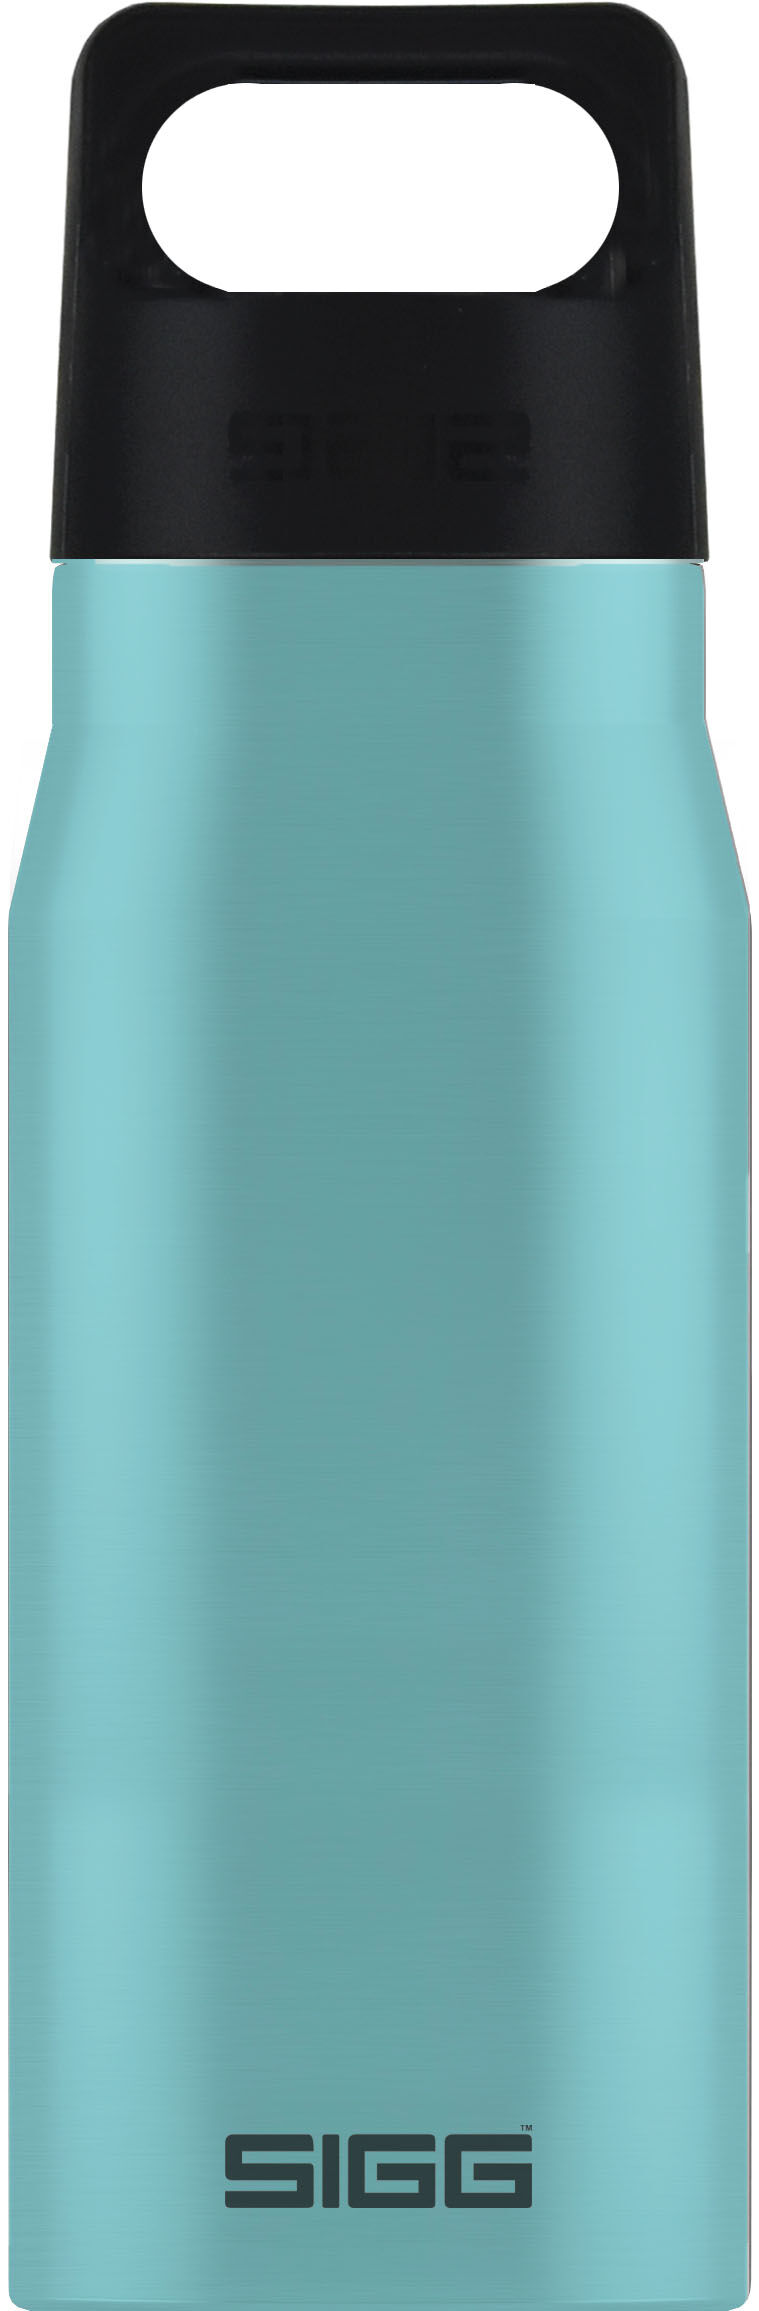 Sigg Explorer 0.75 L - Trinkflasche